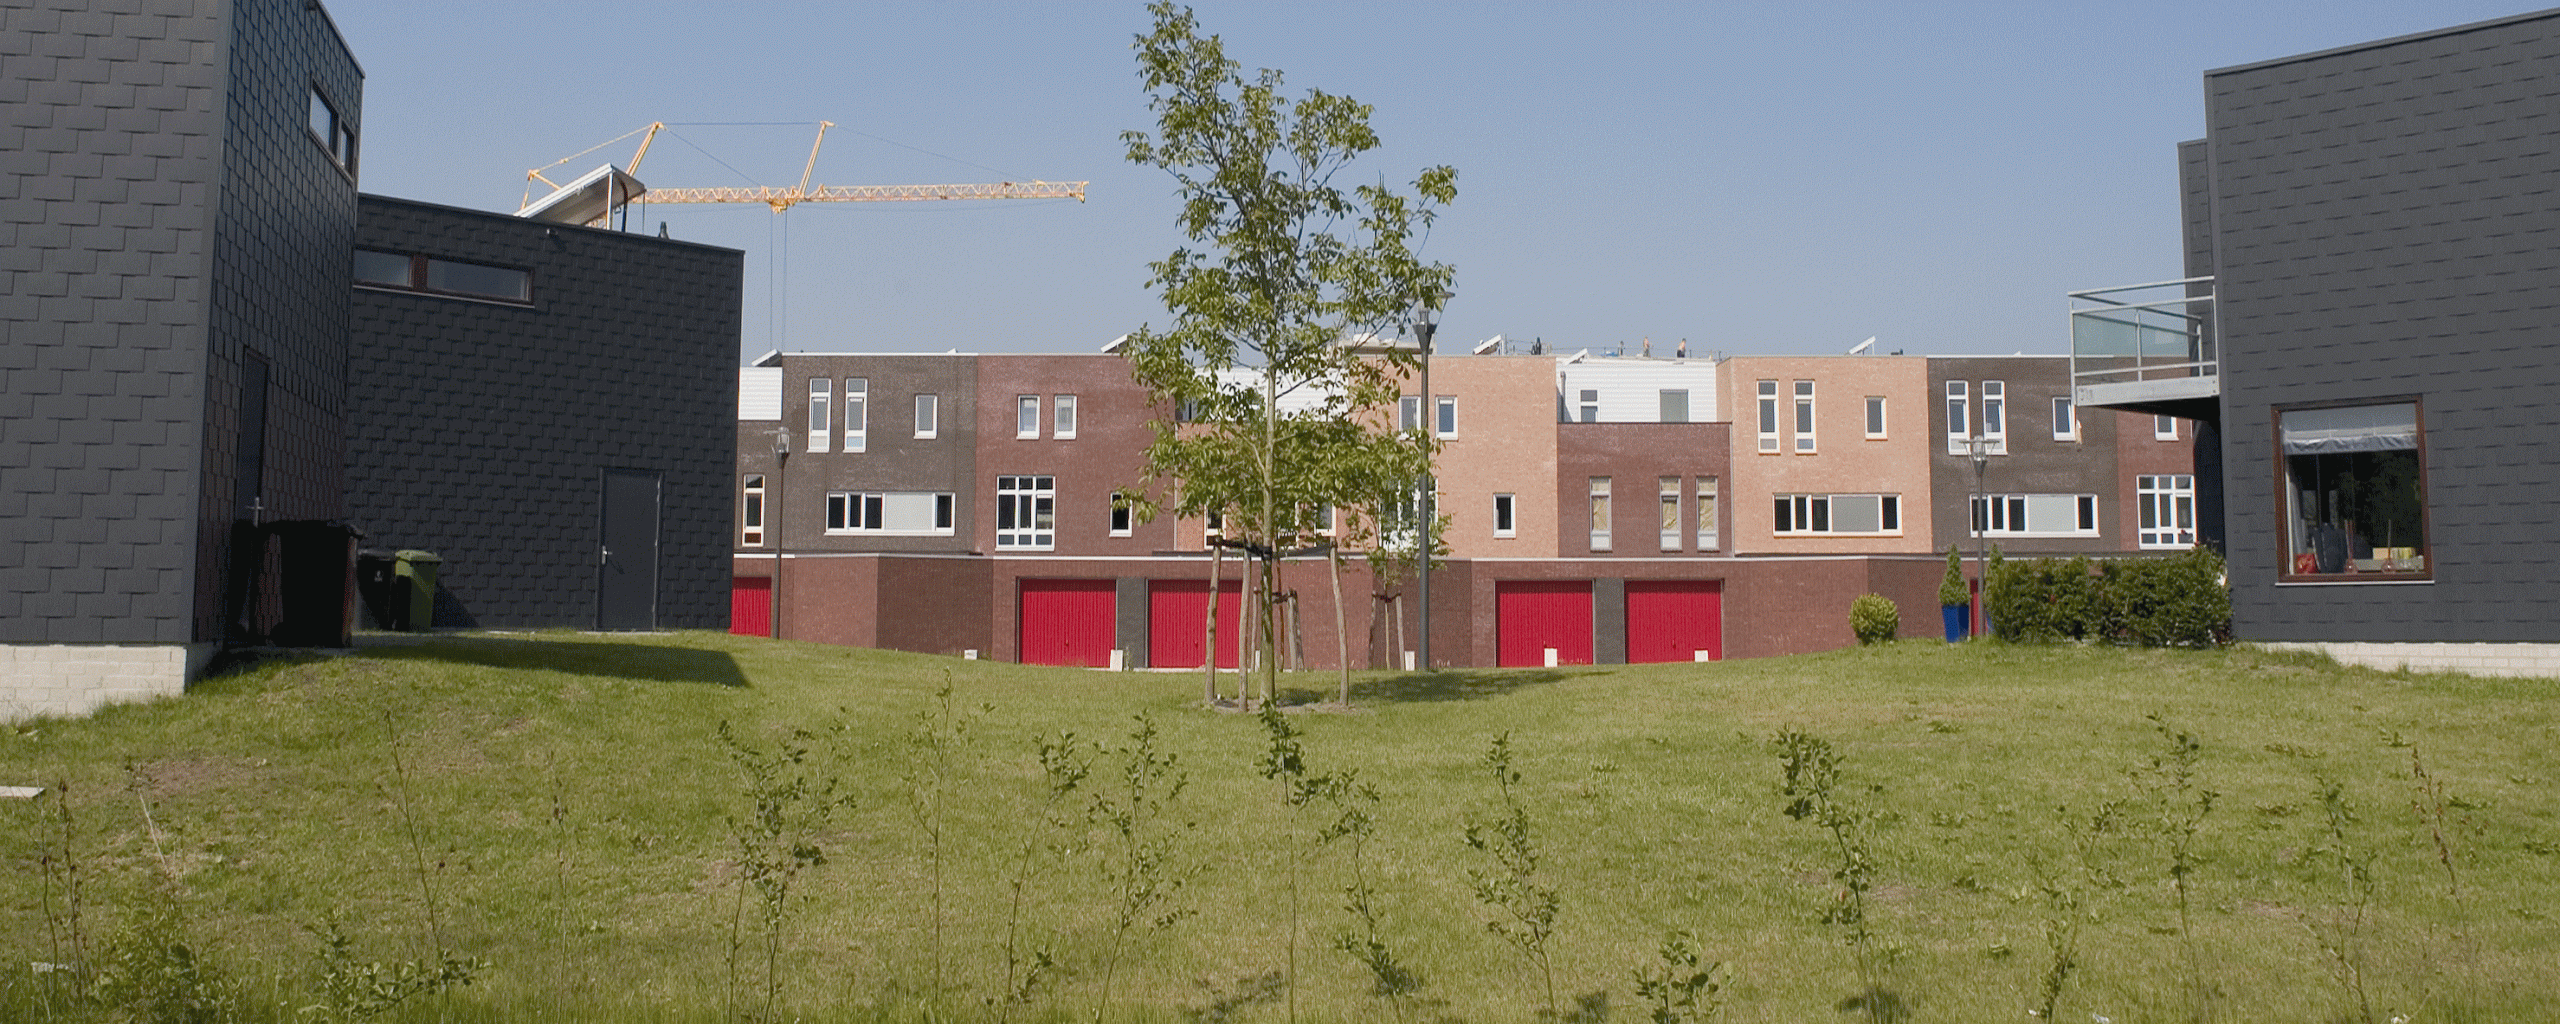 Rij woningen in Landgoed Driessen